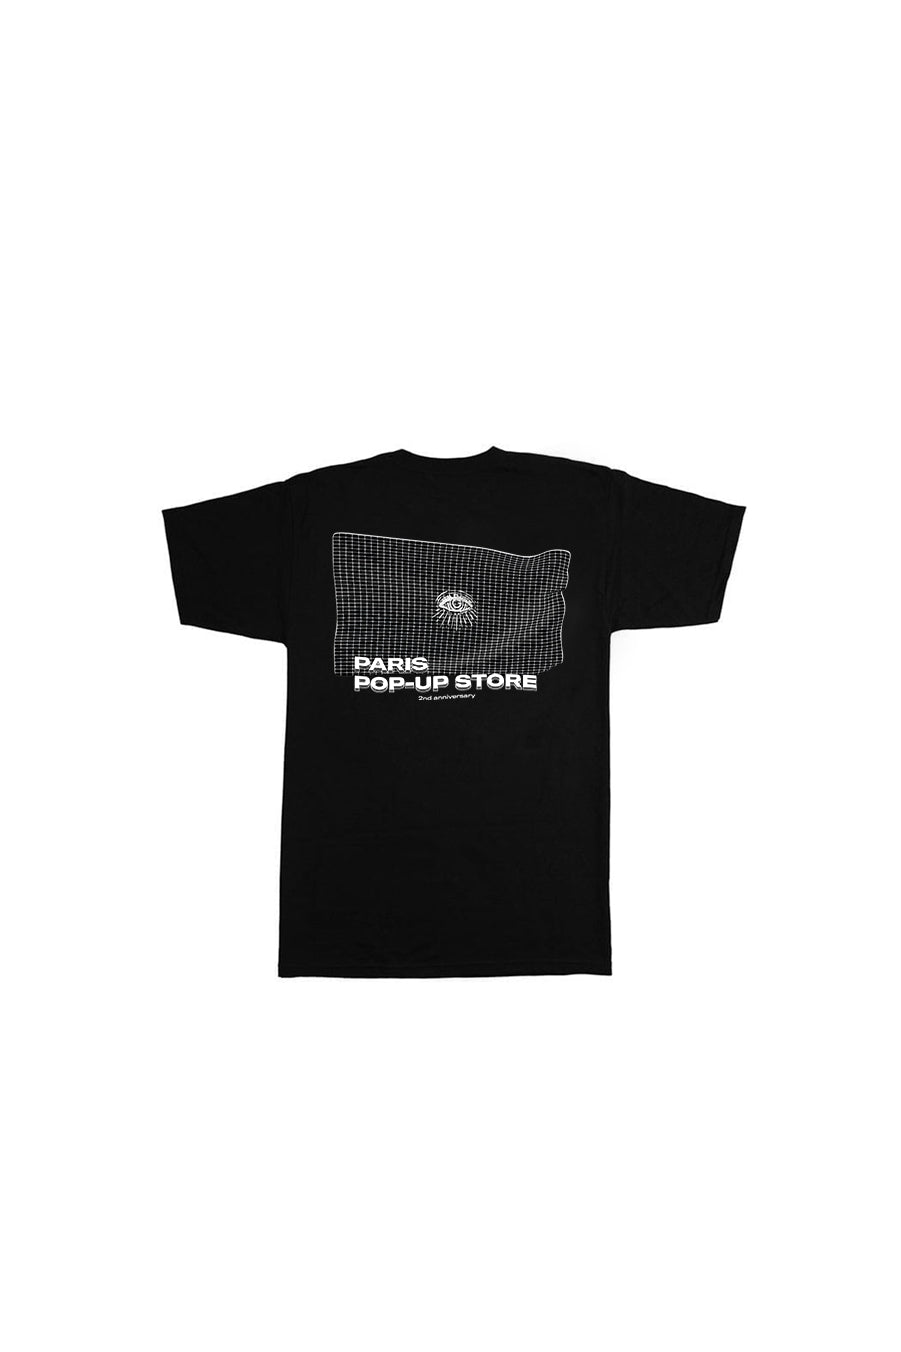 Exclusive Black T-shirt - 2nd anniversary